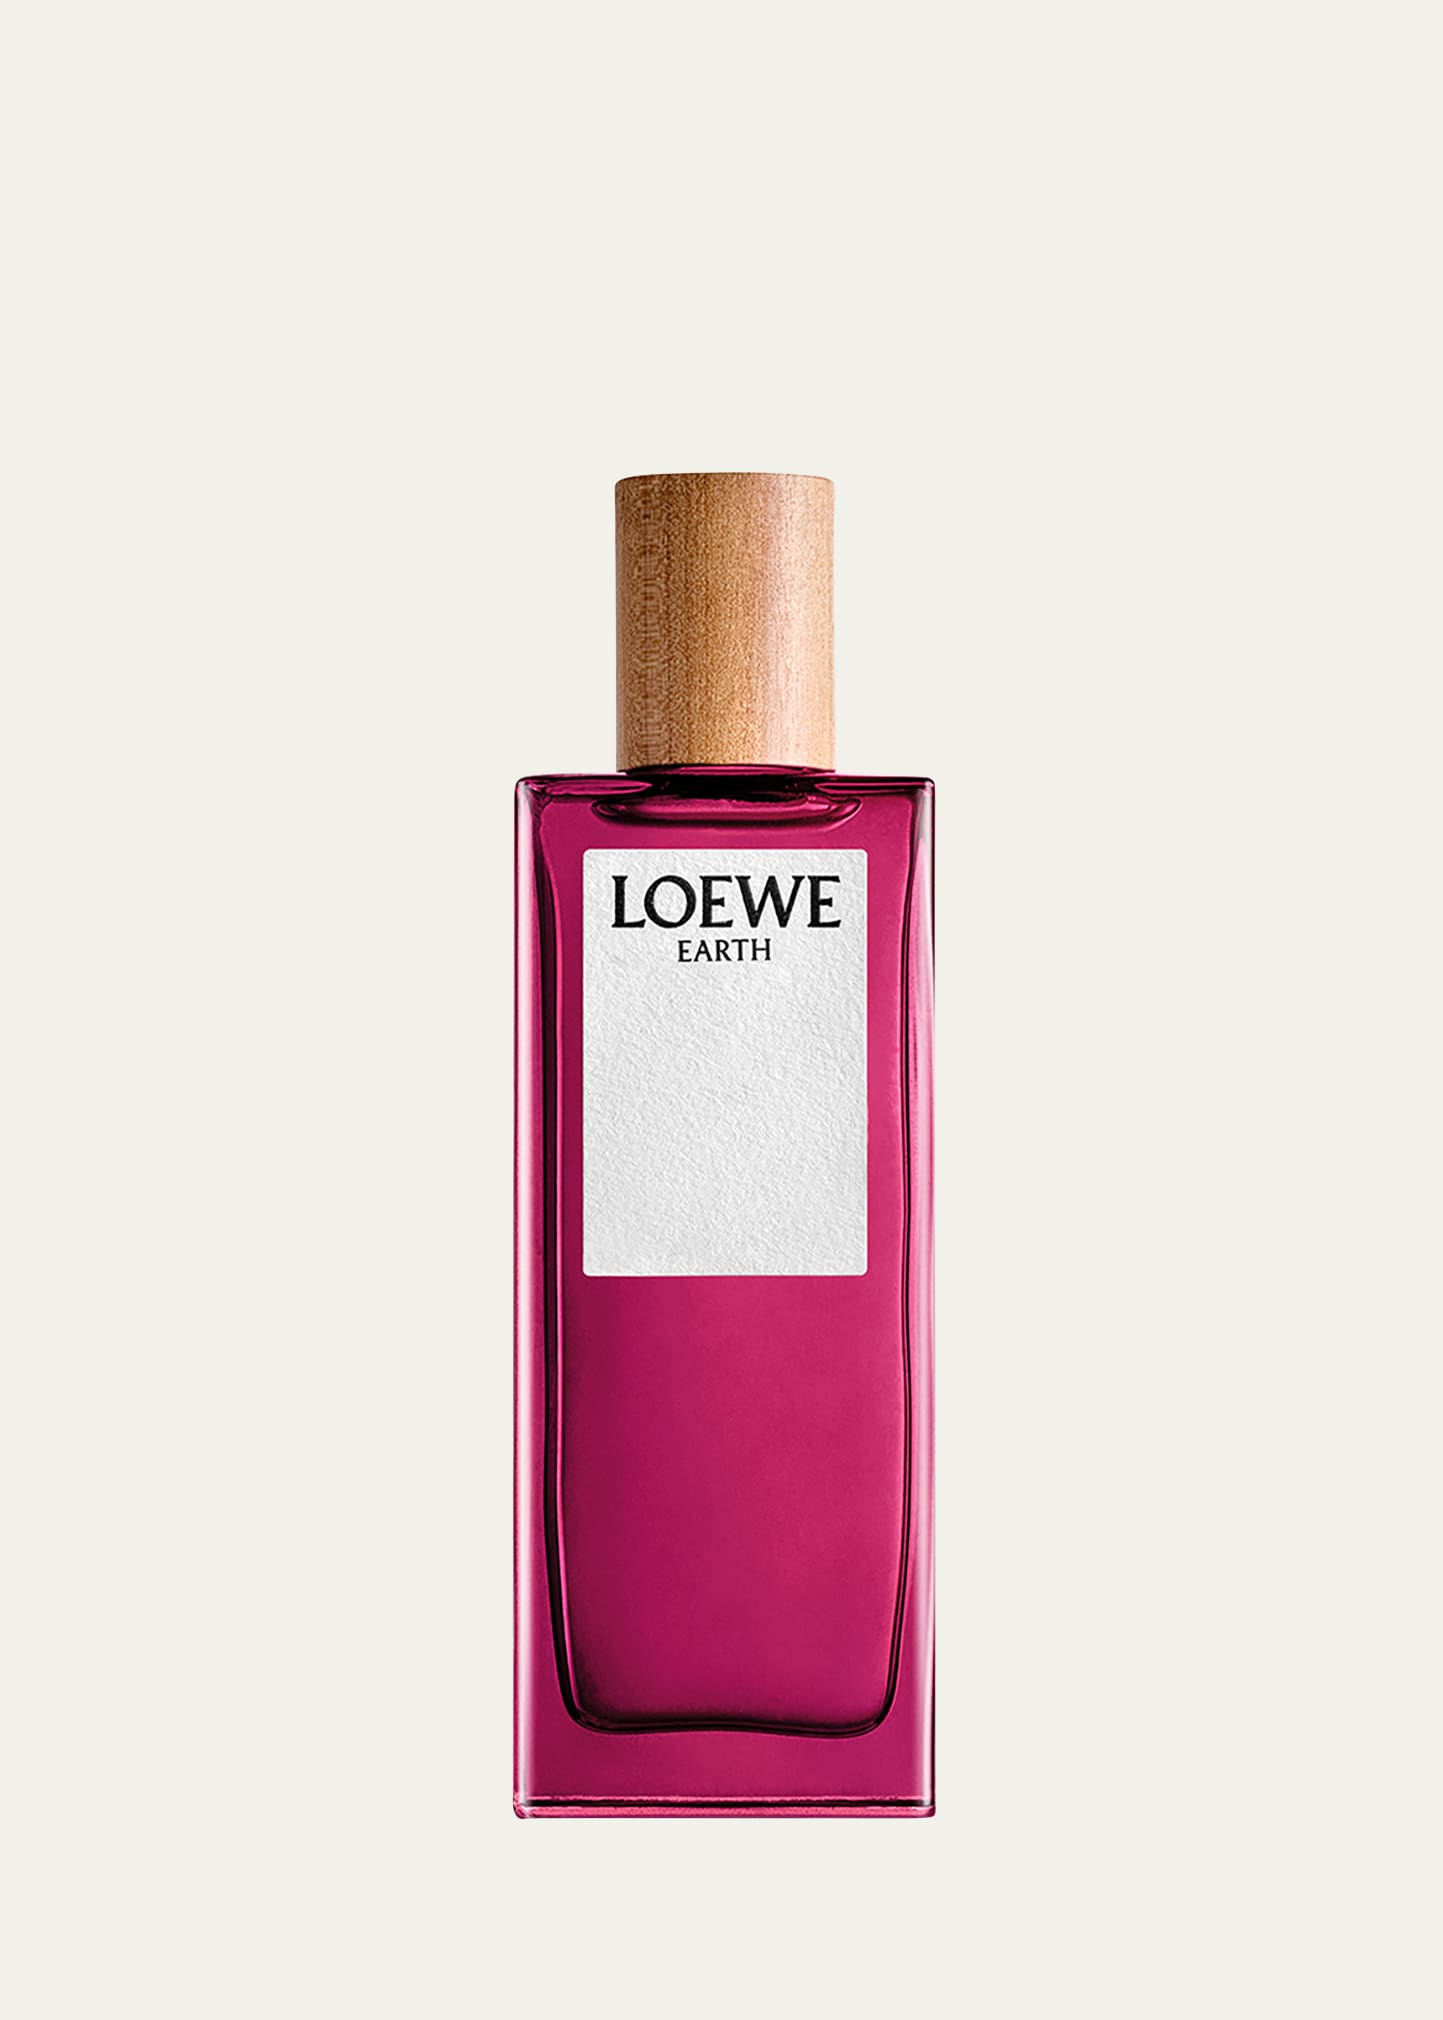 Loewe 1.7 oz. Earth Eau de Parfum